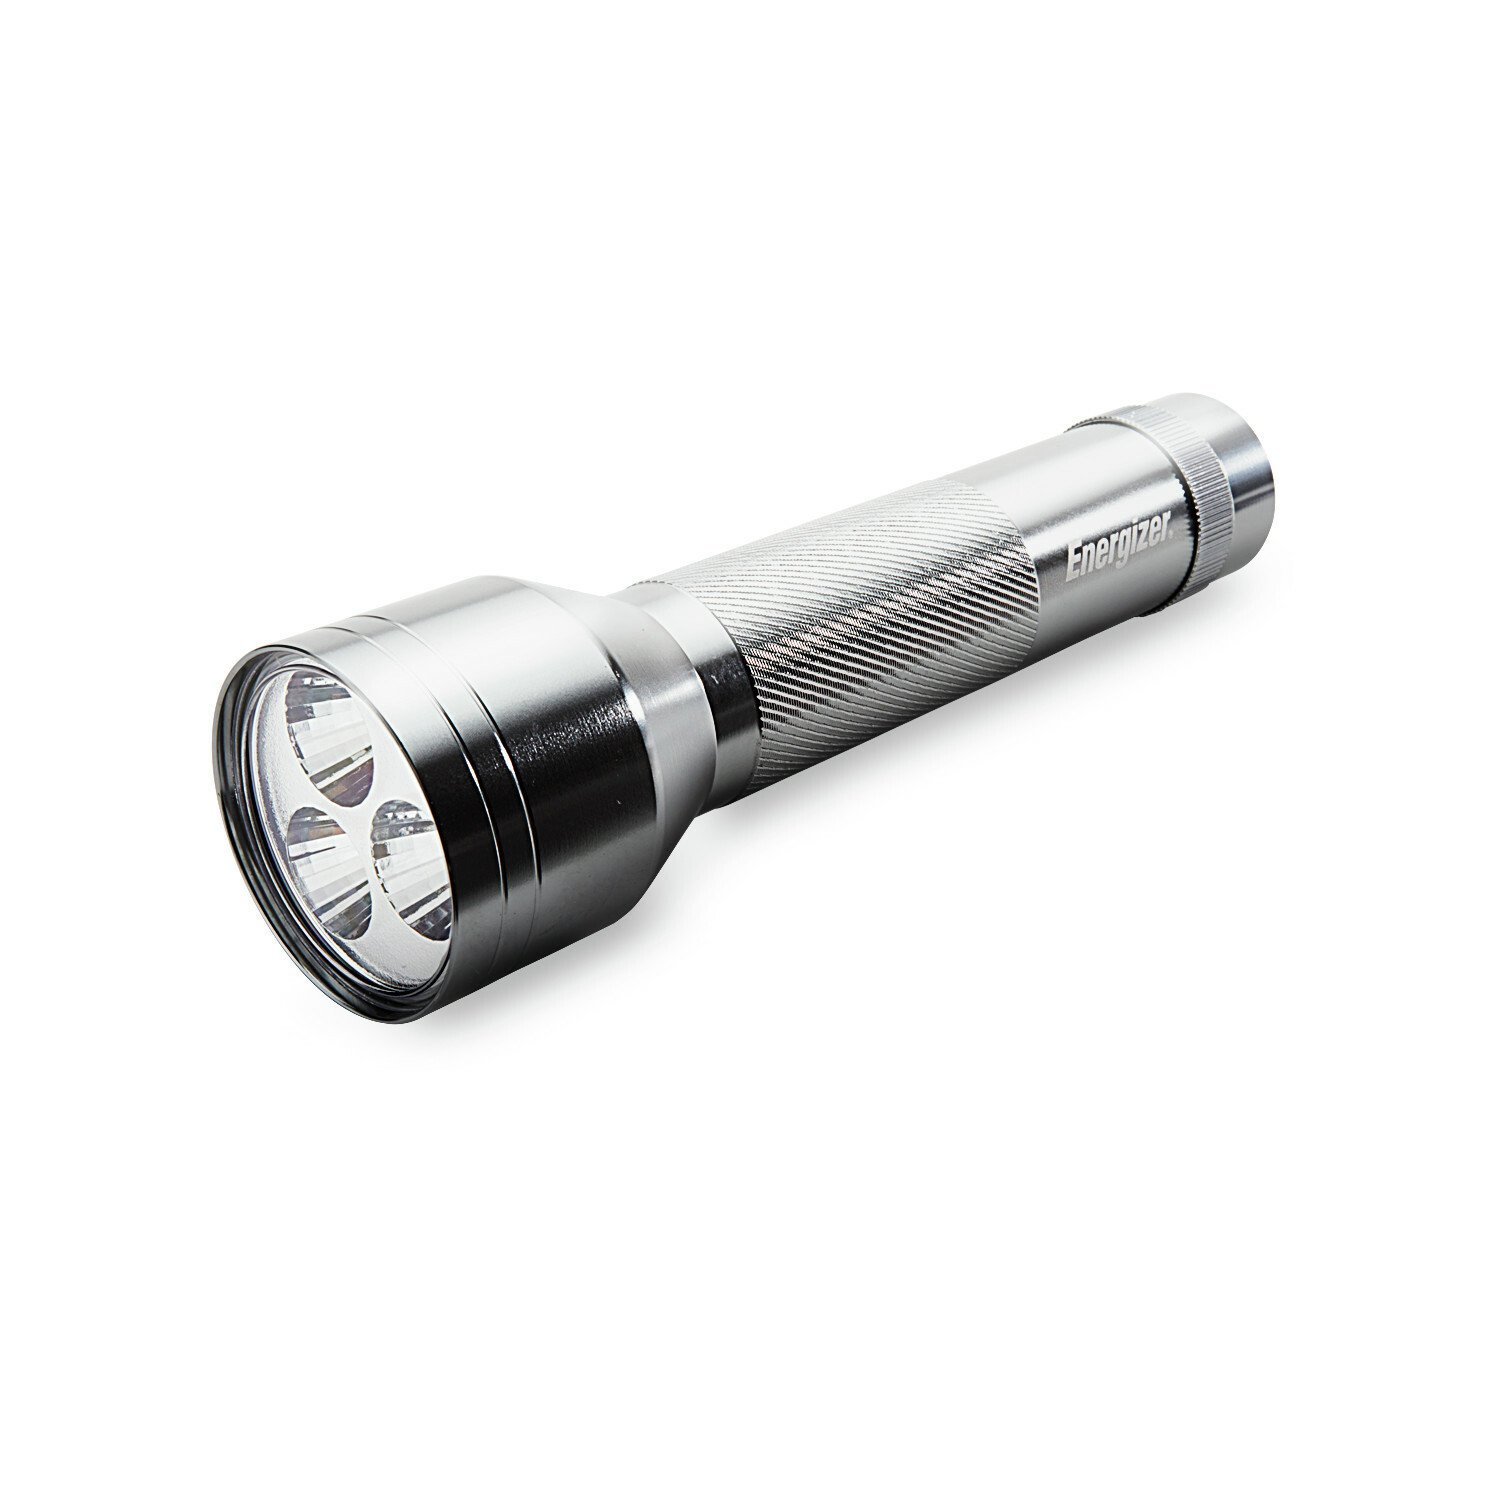 Energizer Metal 2D 135 Lumen LED Torch Review